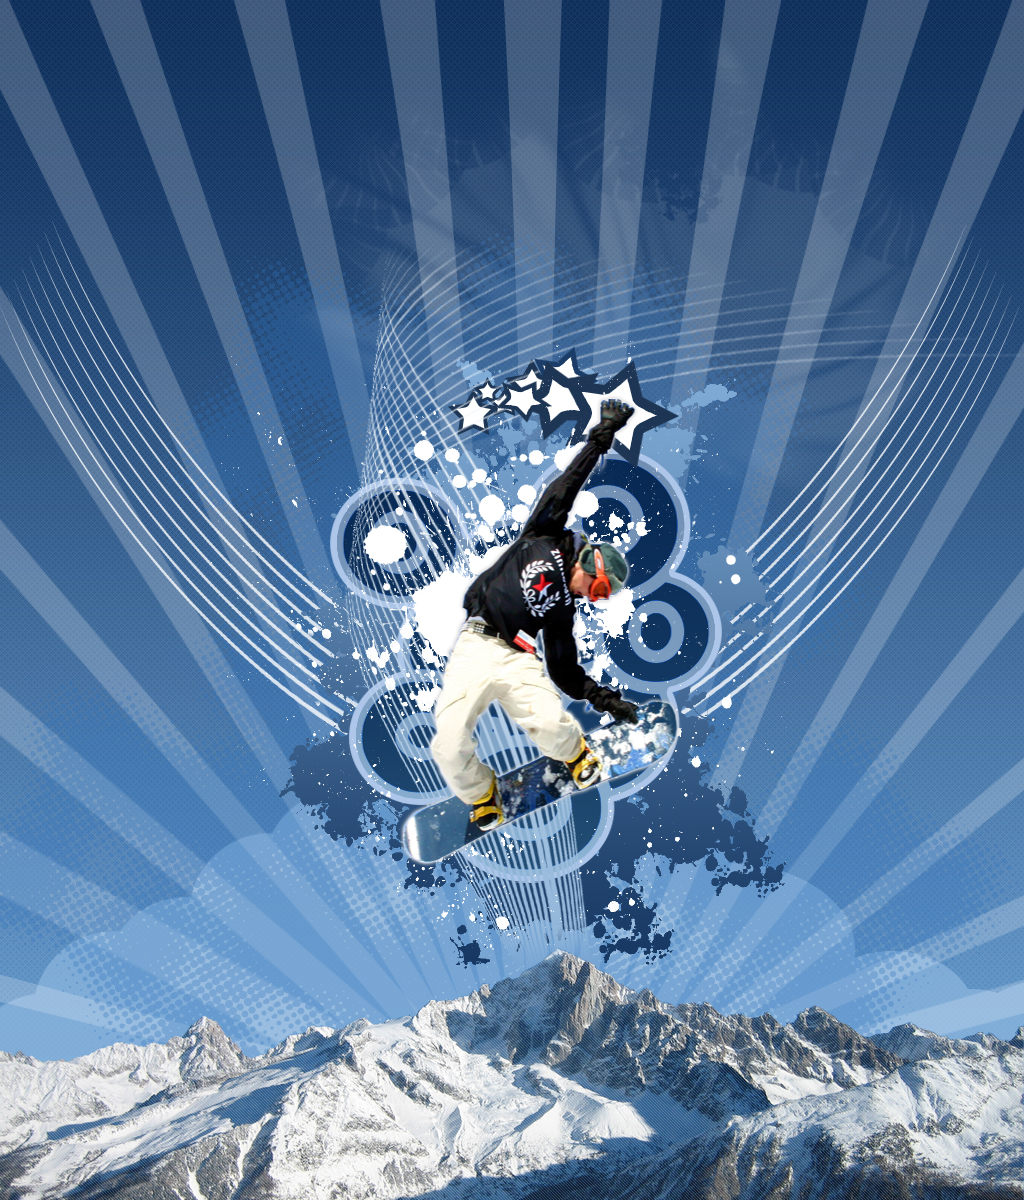 48 Cool Snowboarding Wallpapers On Wallpapersafari